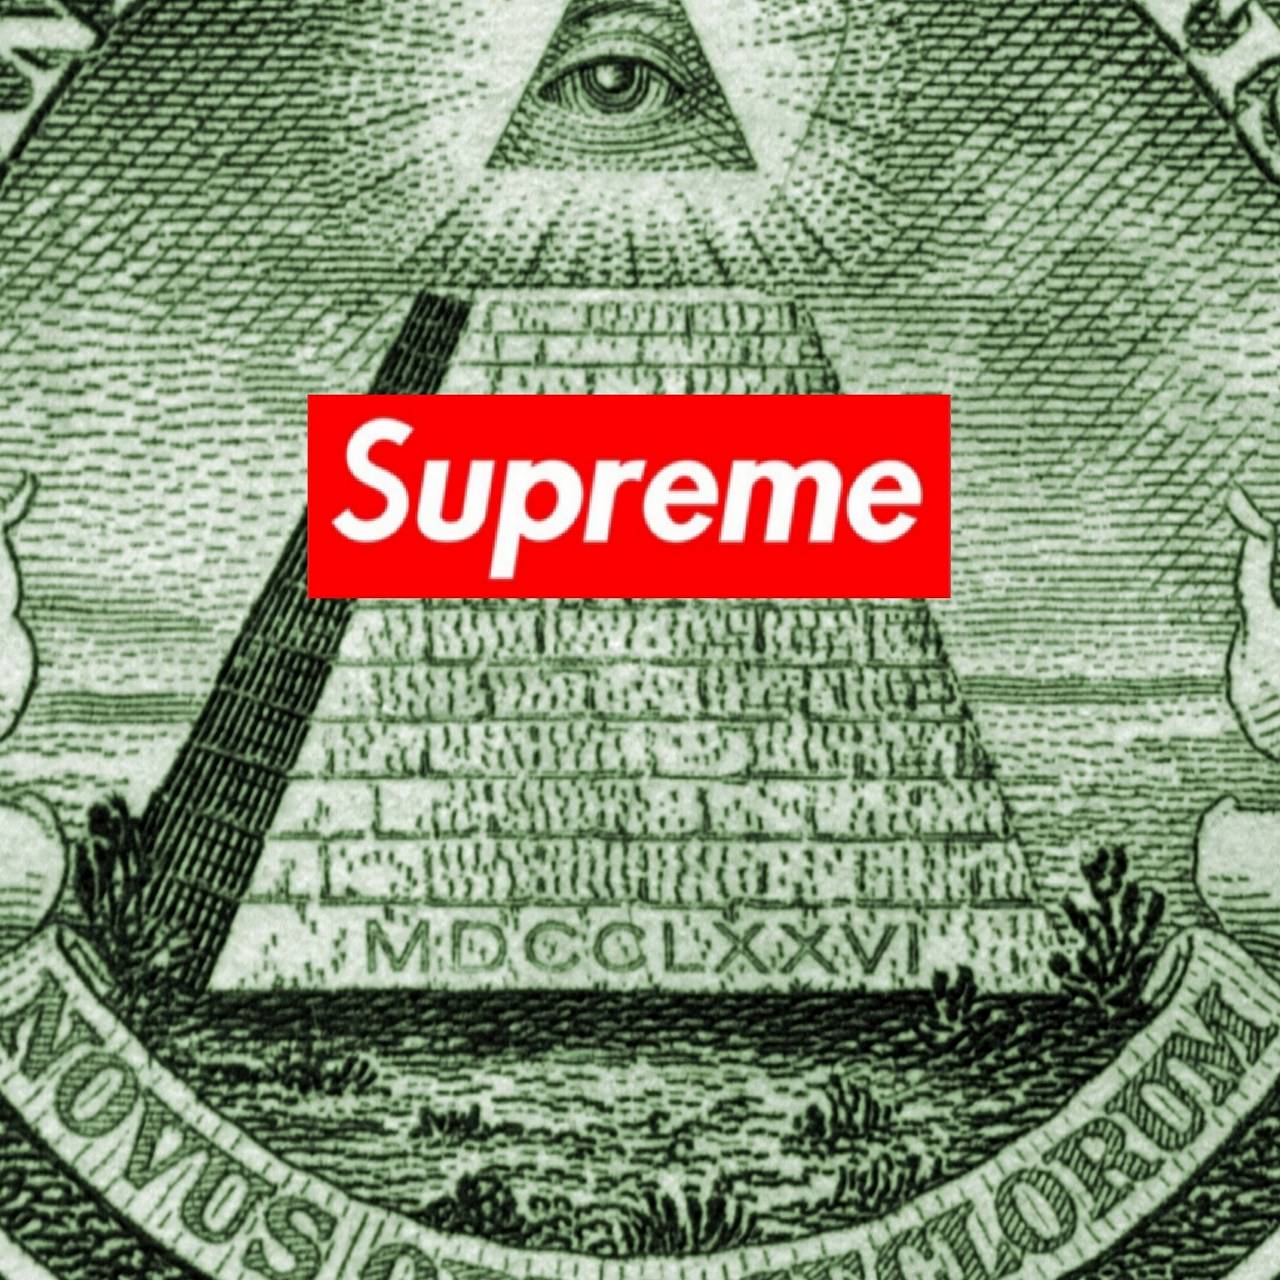 55 Illuminati Supreme Iphone Wallpaper On Wallpapersafari